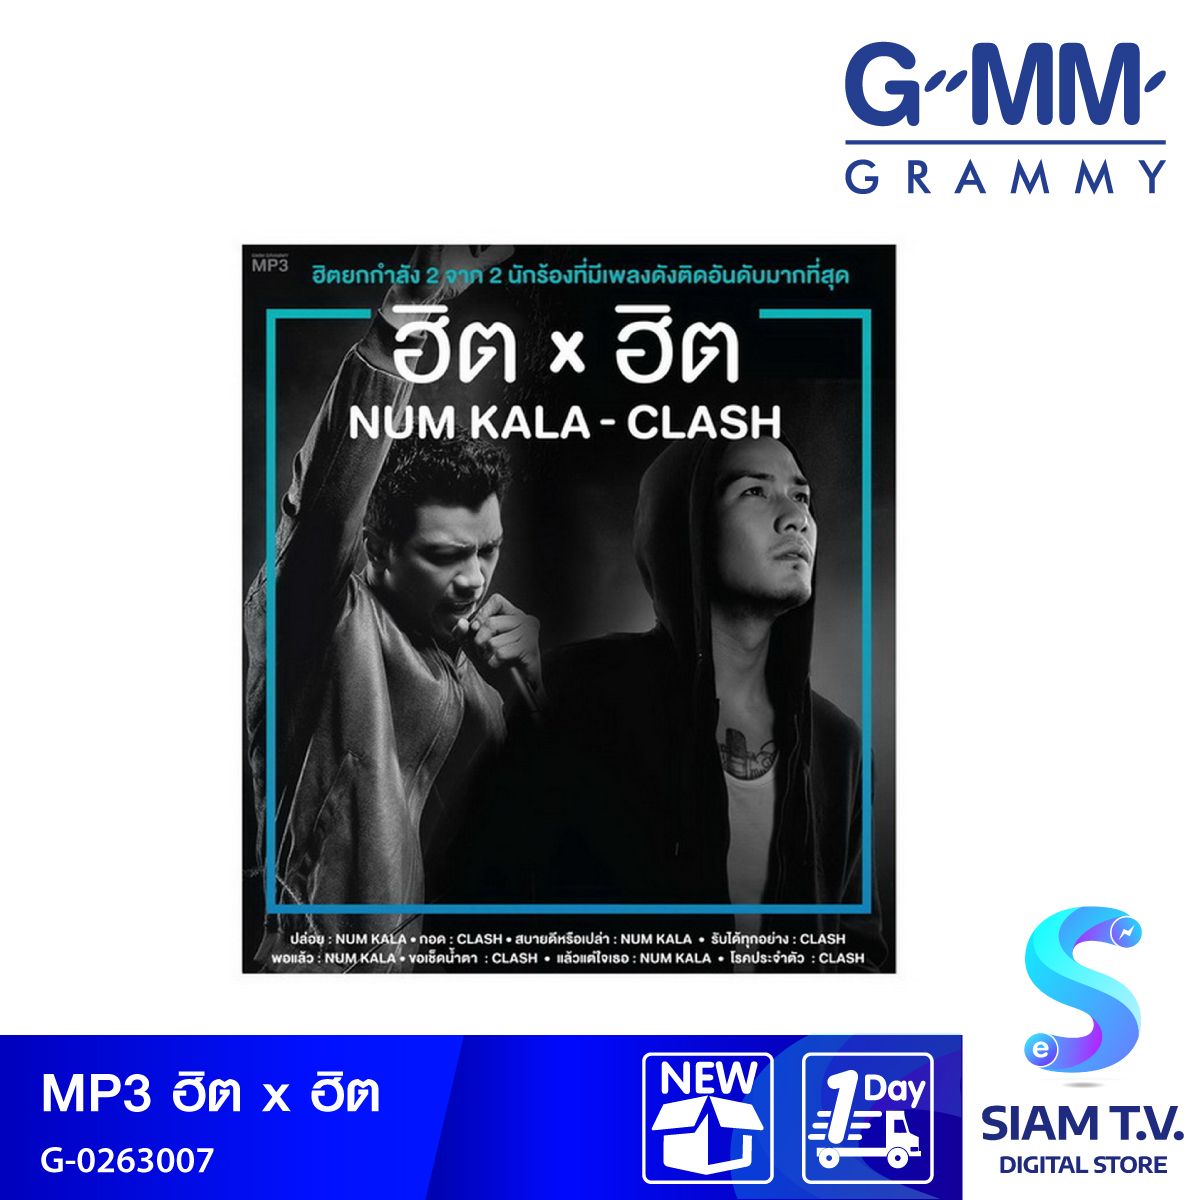 GMM GRAMMY MP3ฮิตxฮิต NUM KALA-CLASH